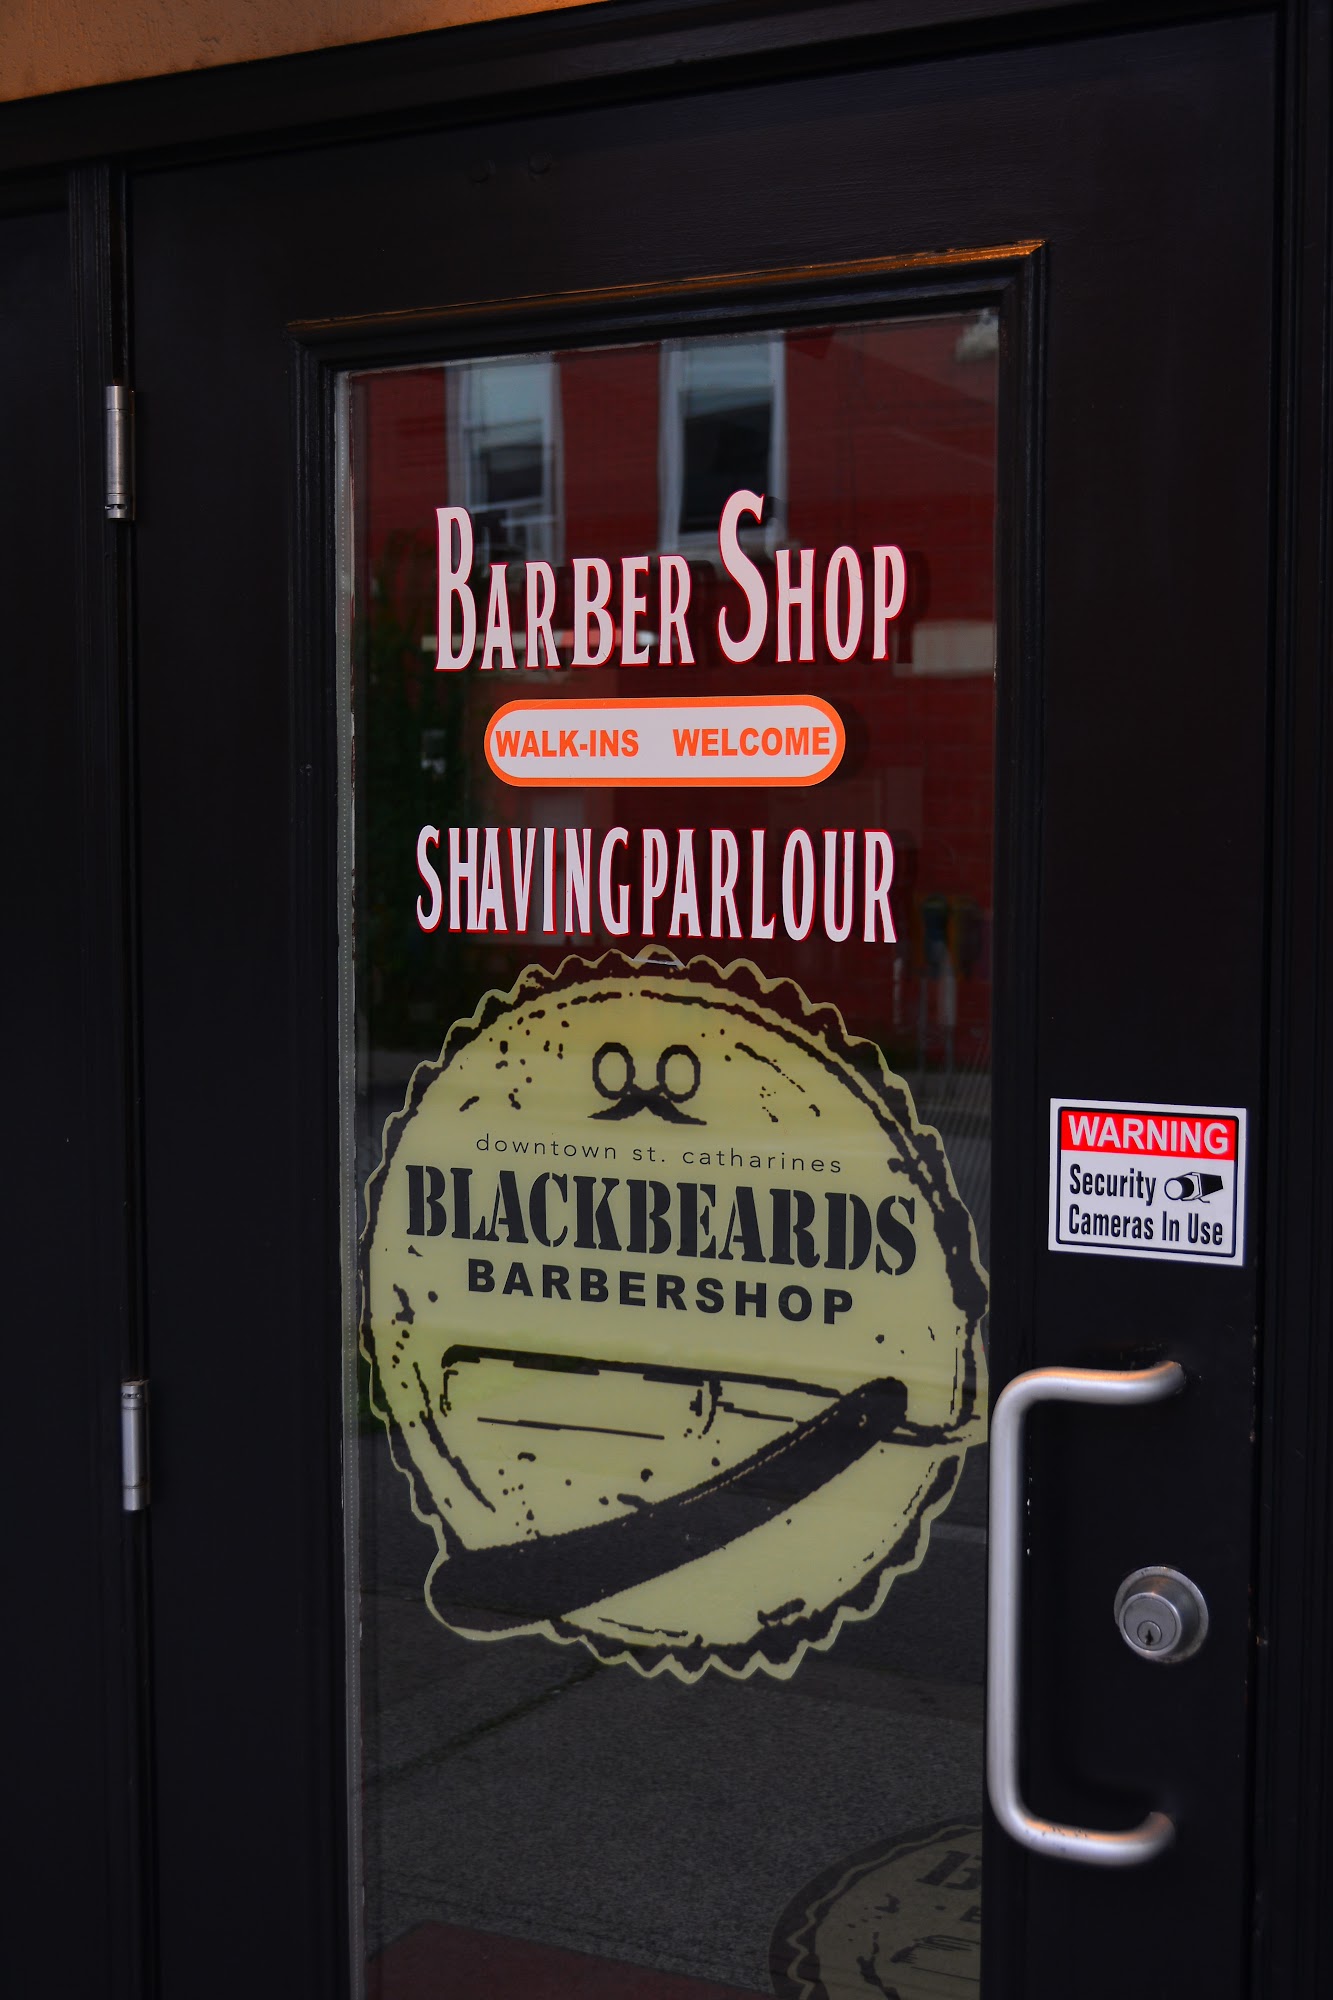 Blackbeards Barber Shop